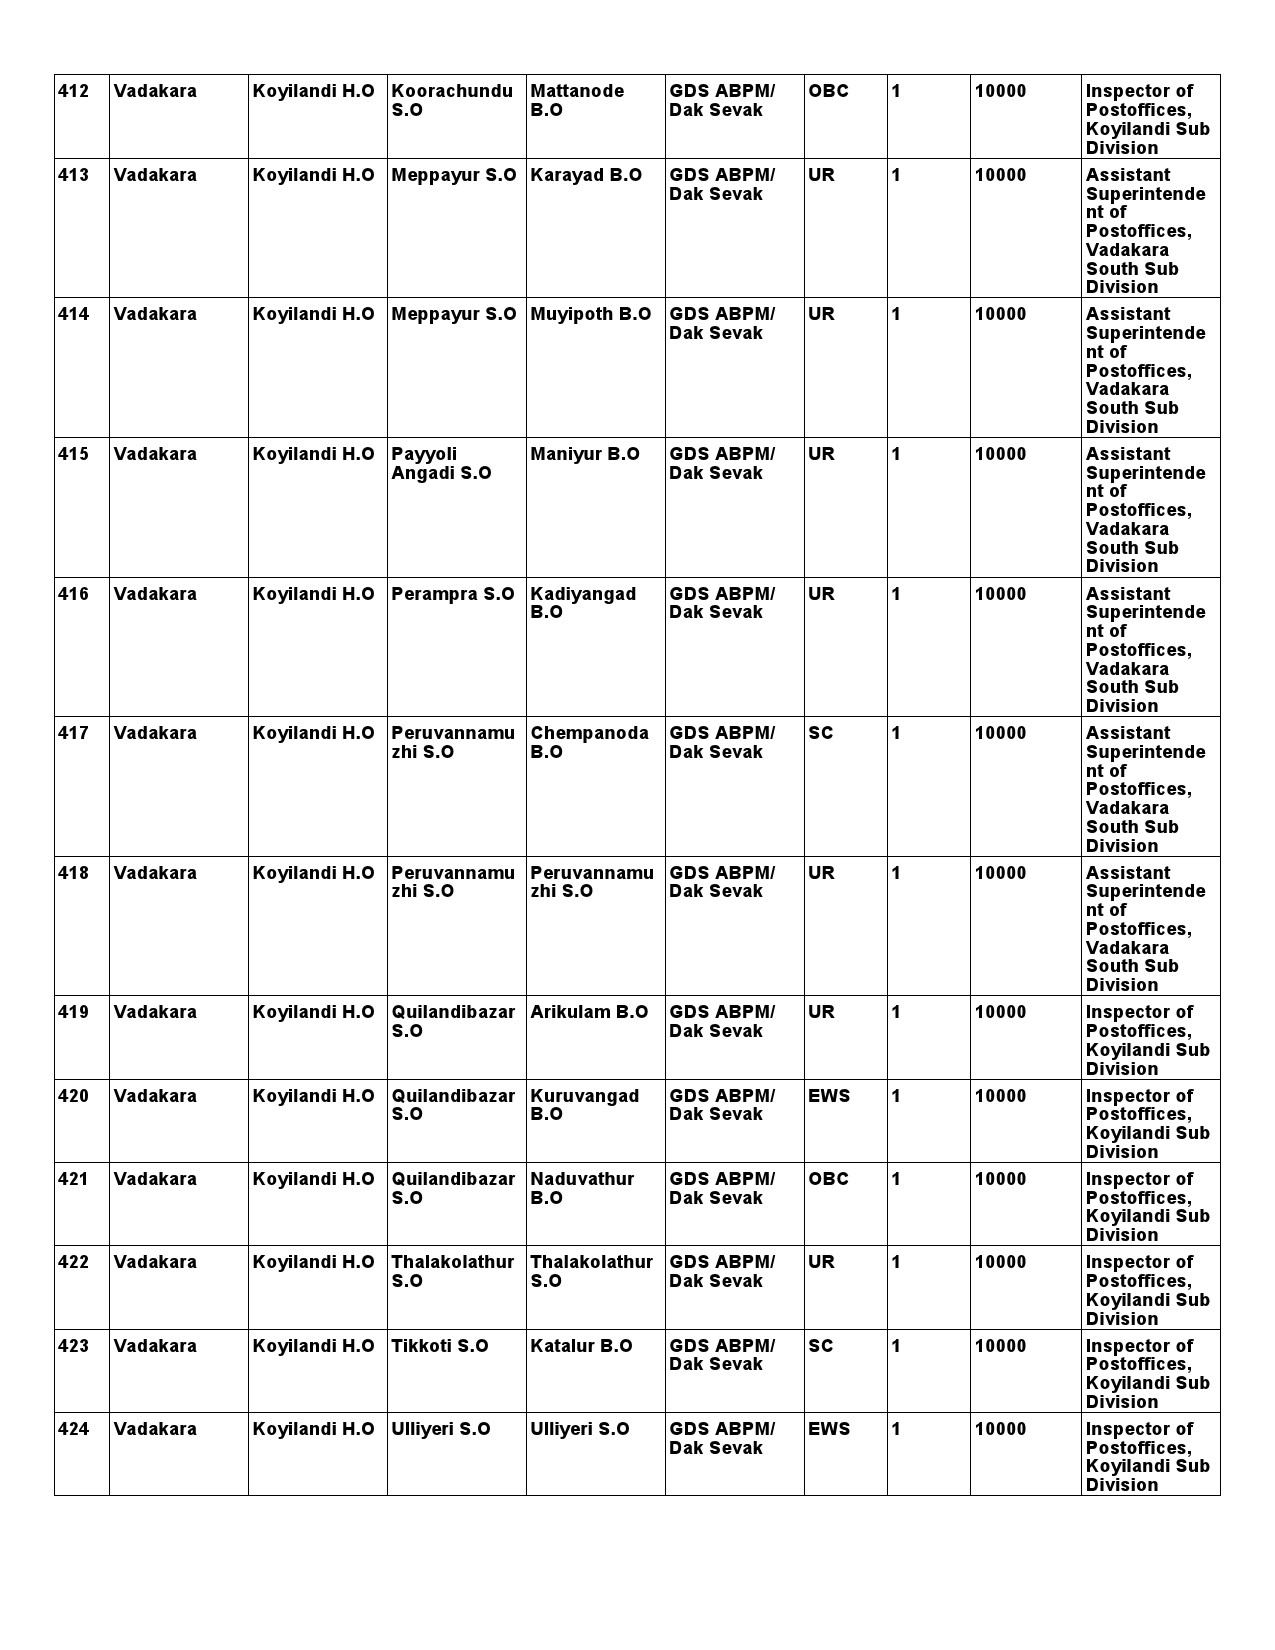 Kerala Postal Circle GDS Recruitment 2021 notification - Notification Image 45